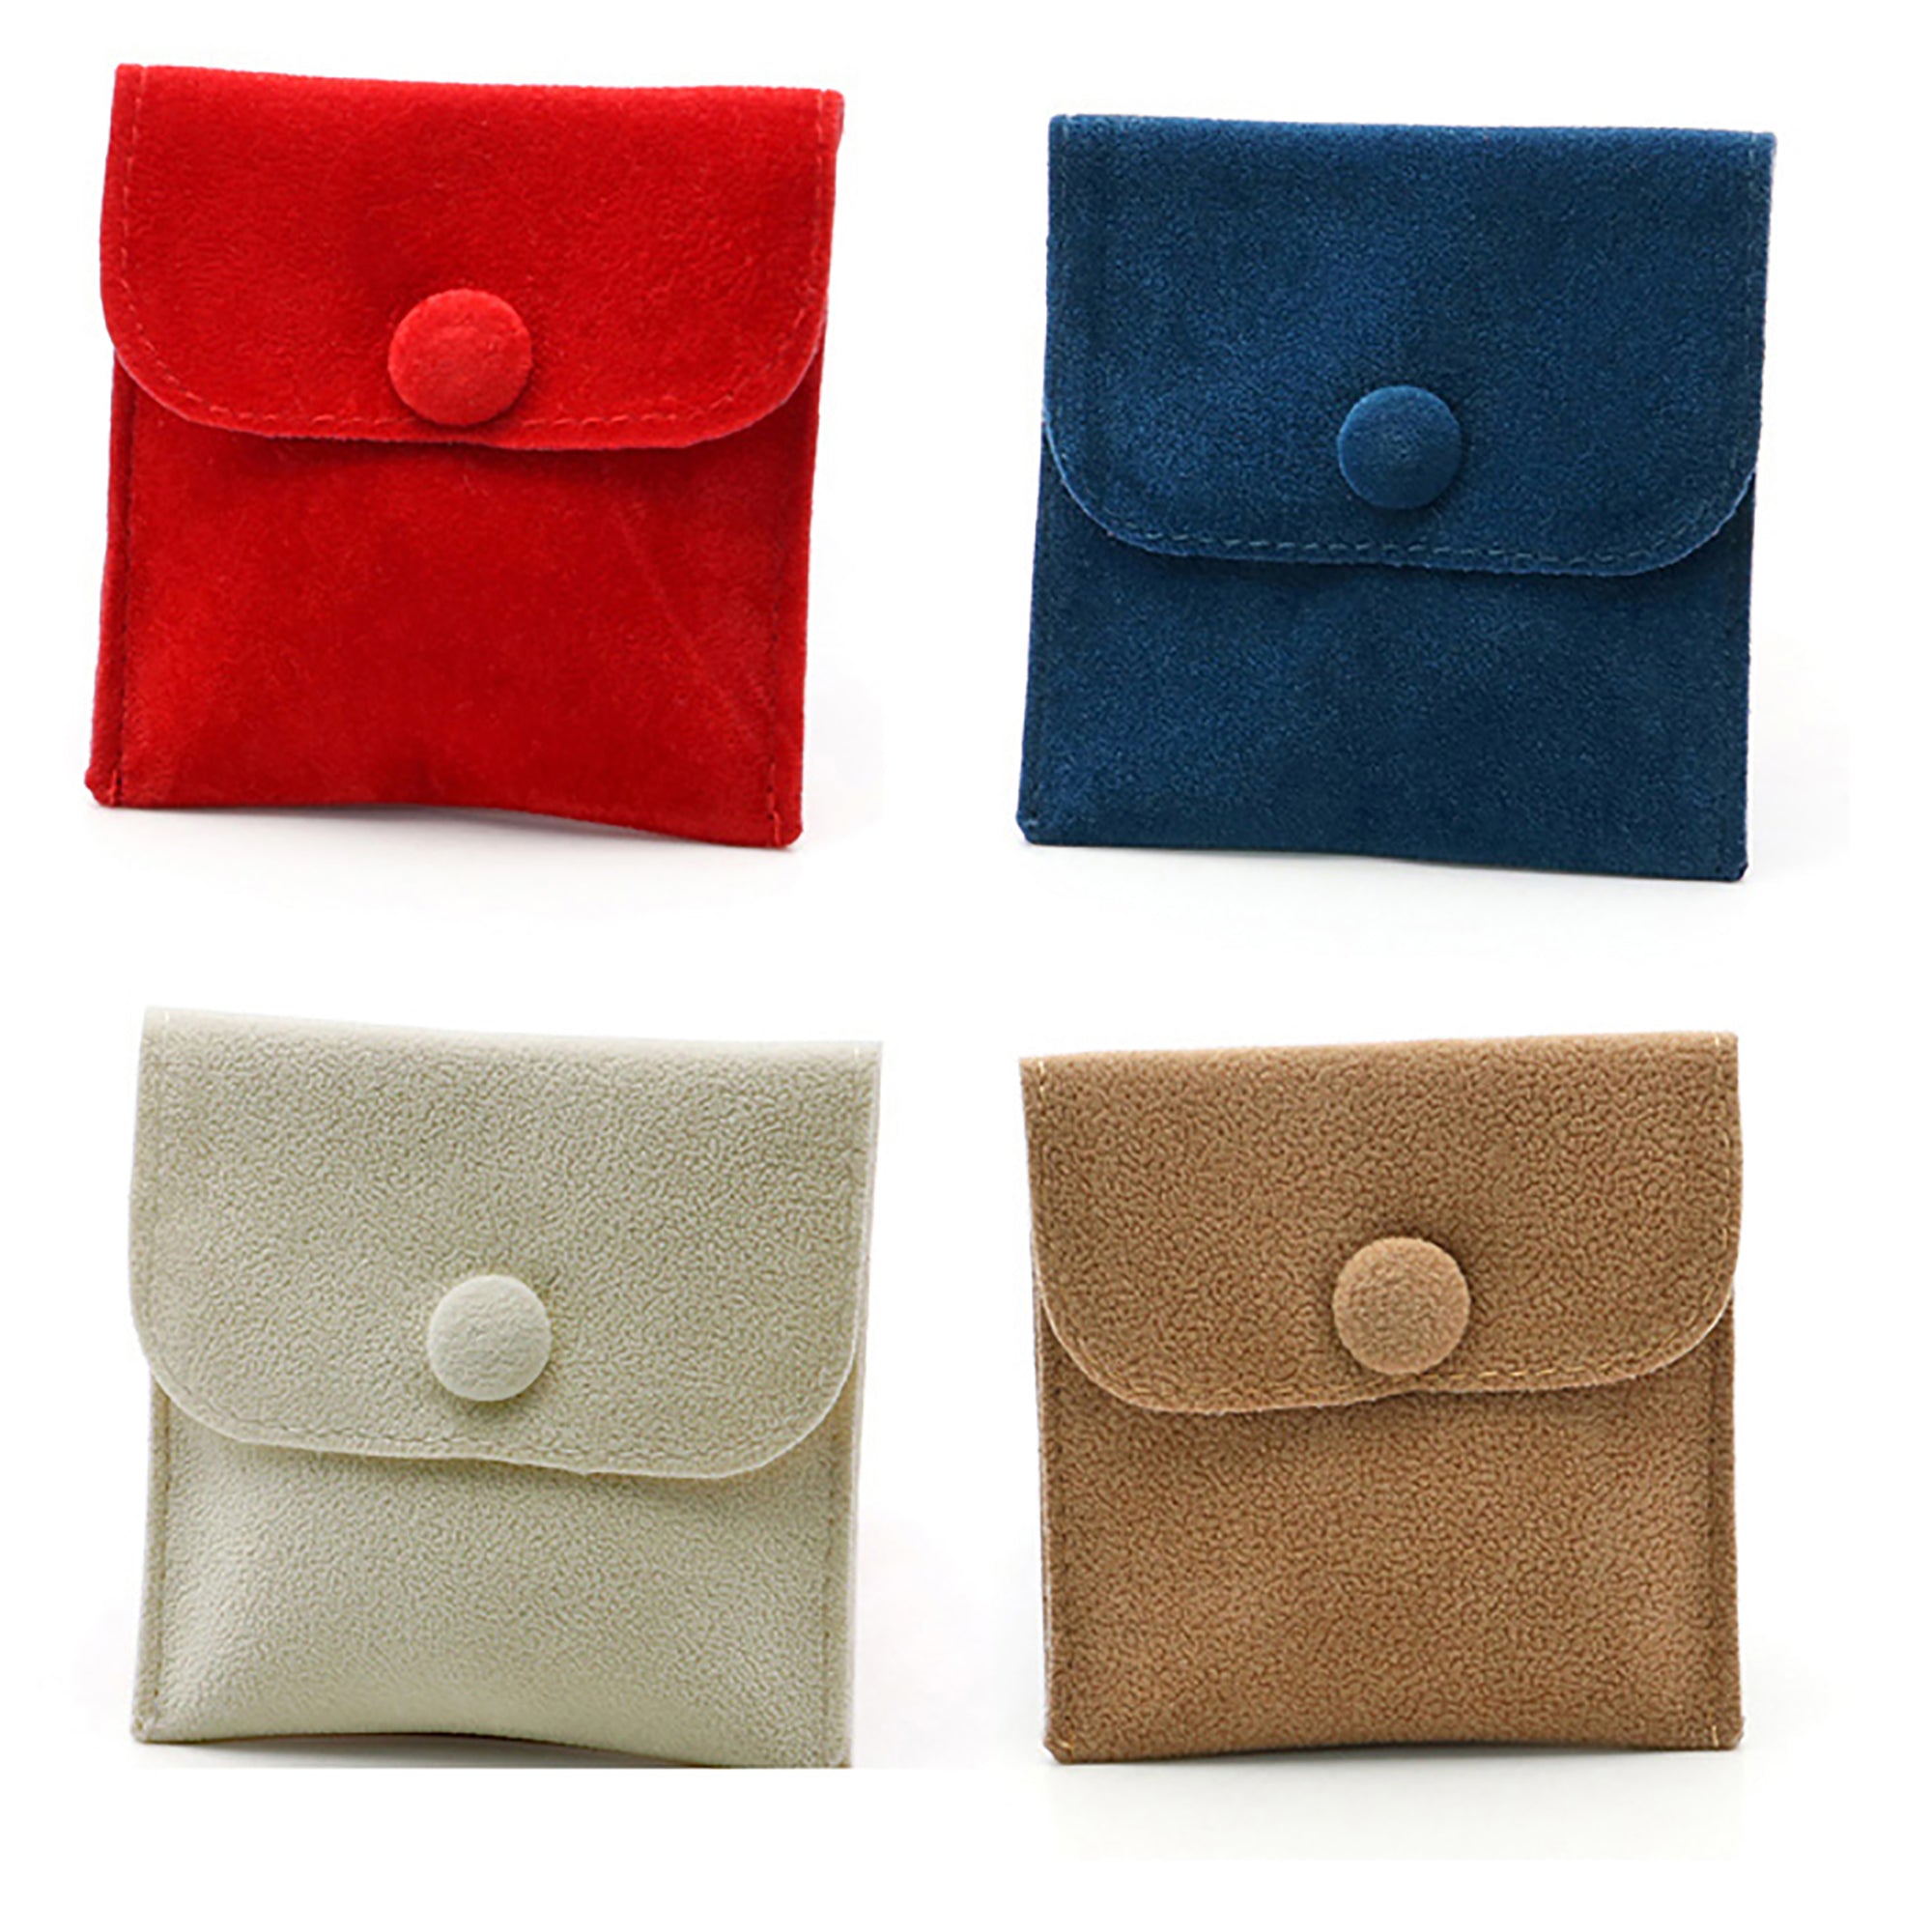 6 Colors Flannel Bag Jewelry Box Organizer Bags Set Vintage Gift Home Deco Decoration Design